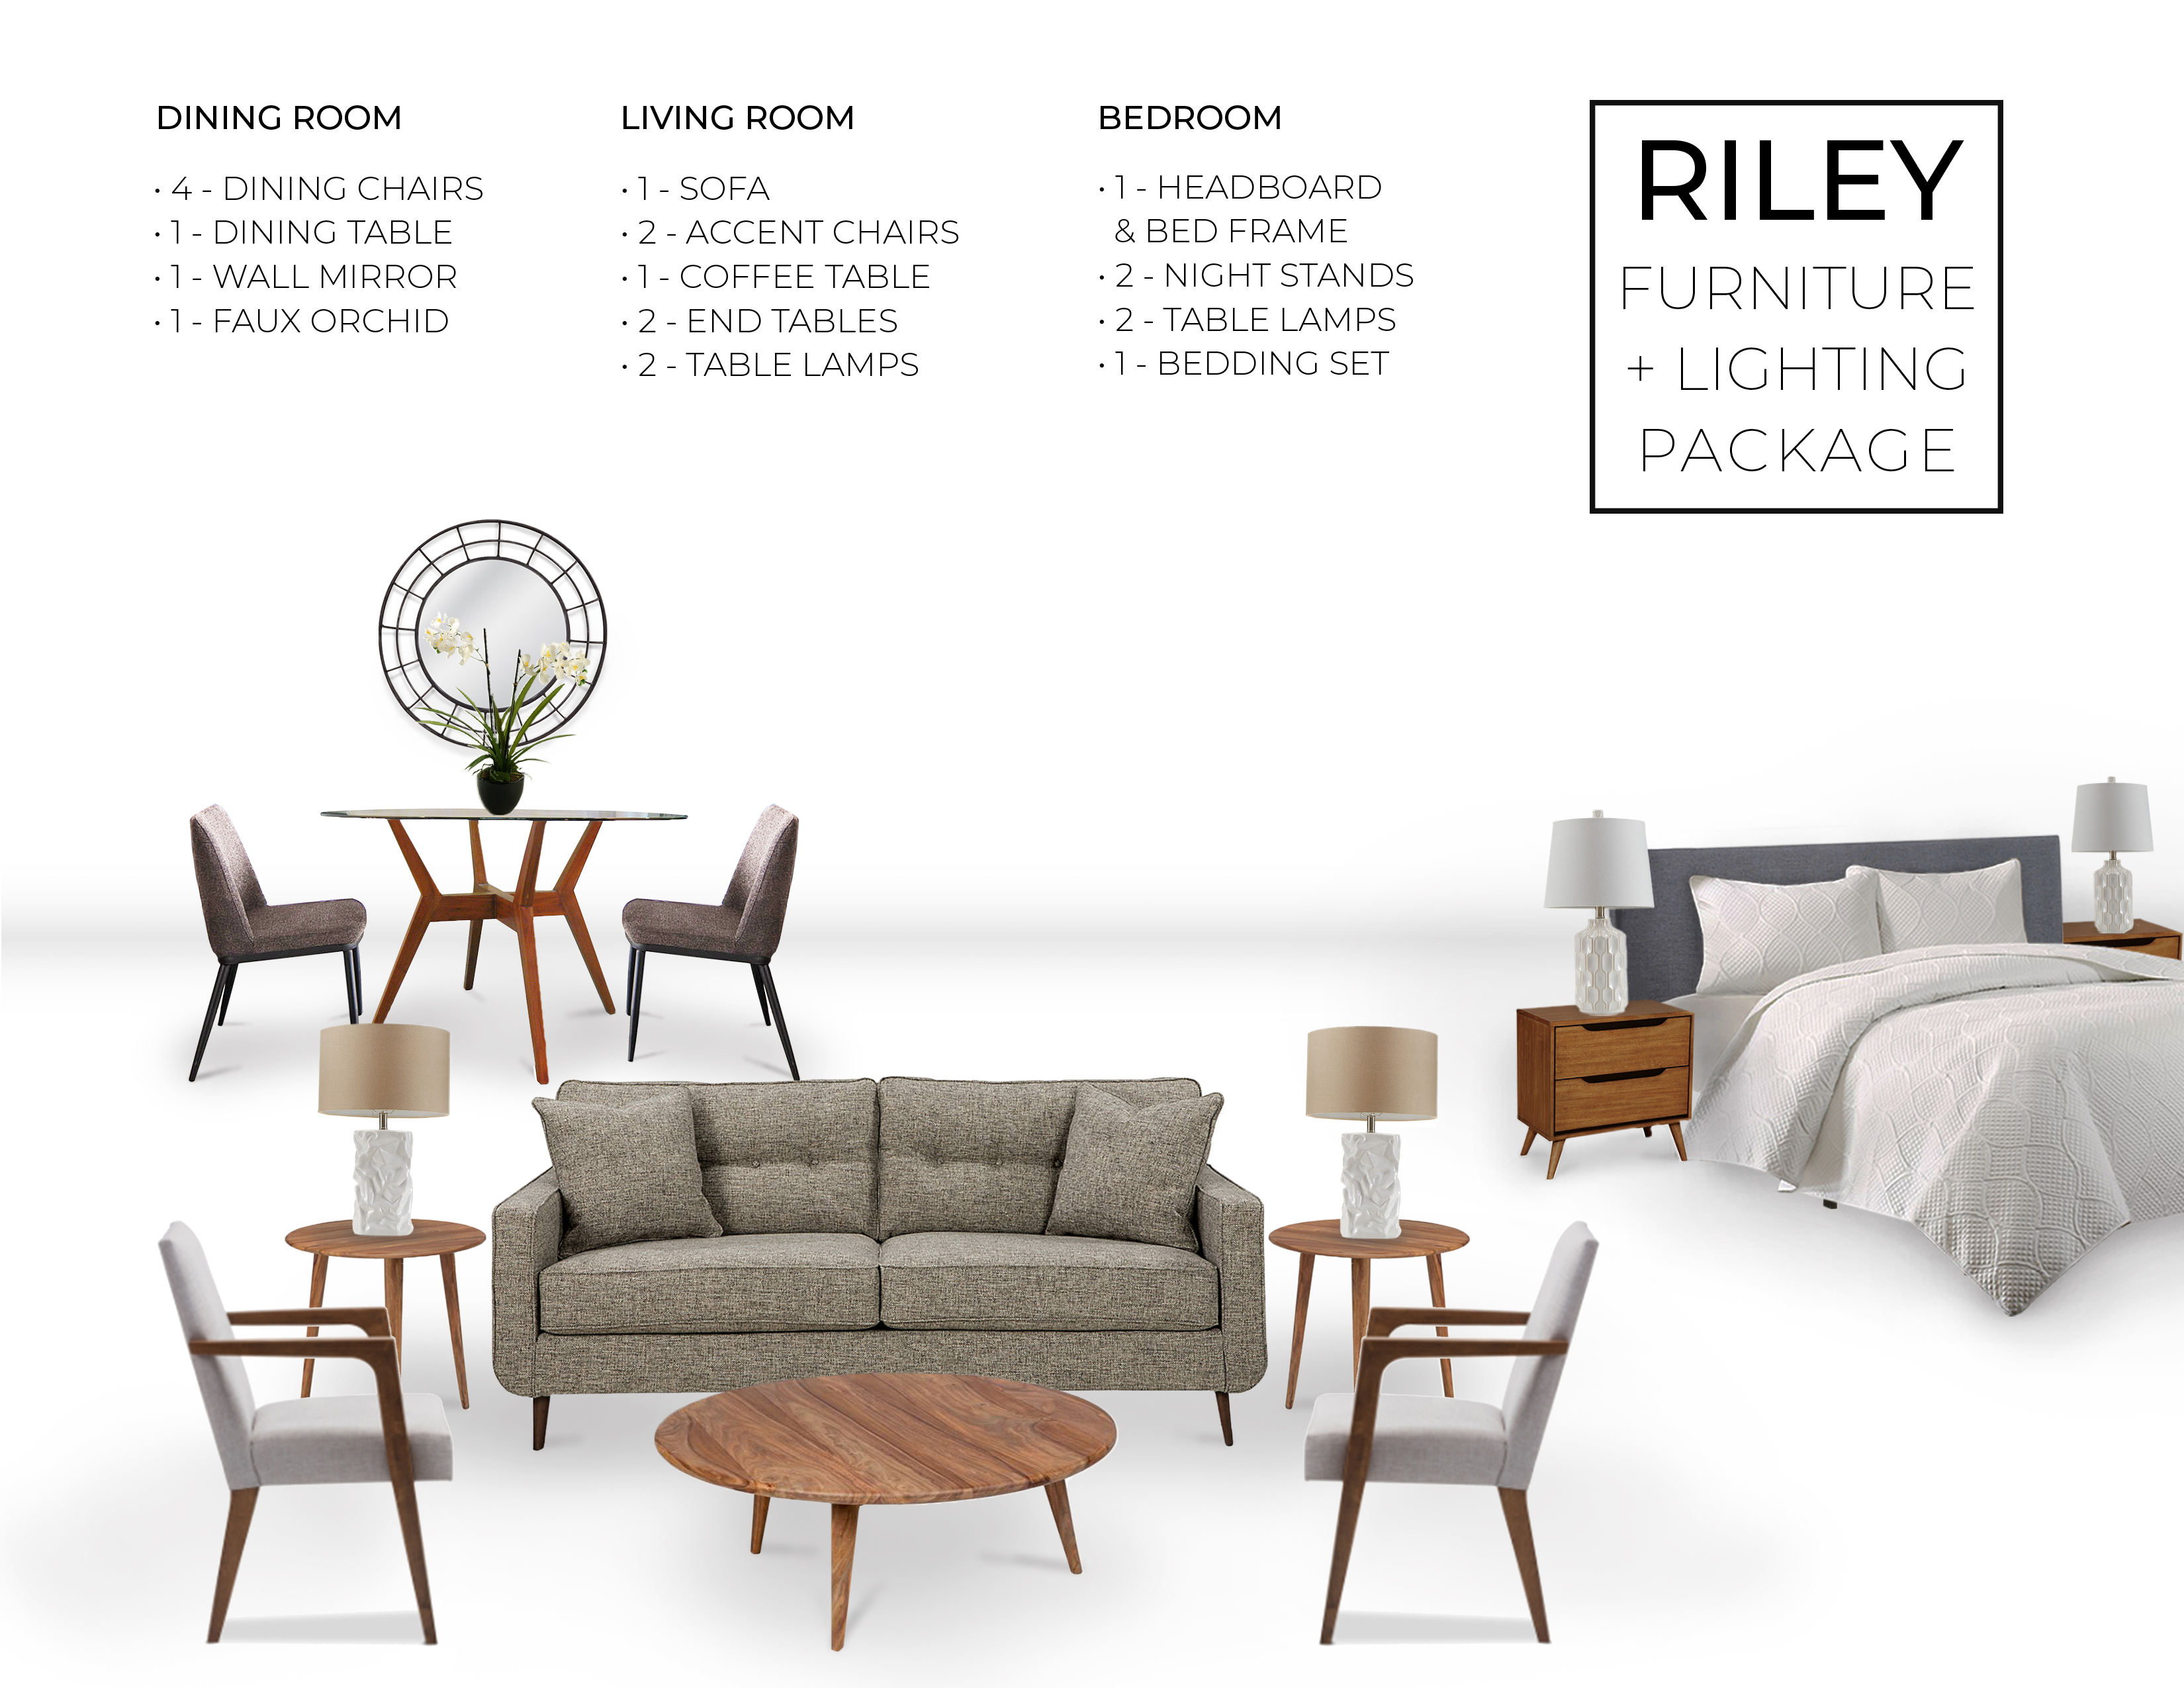 Riley Furniture Package